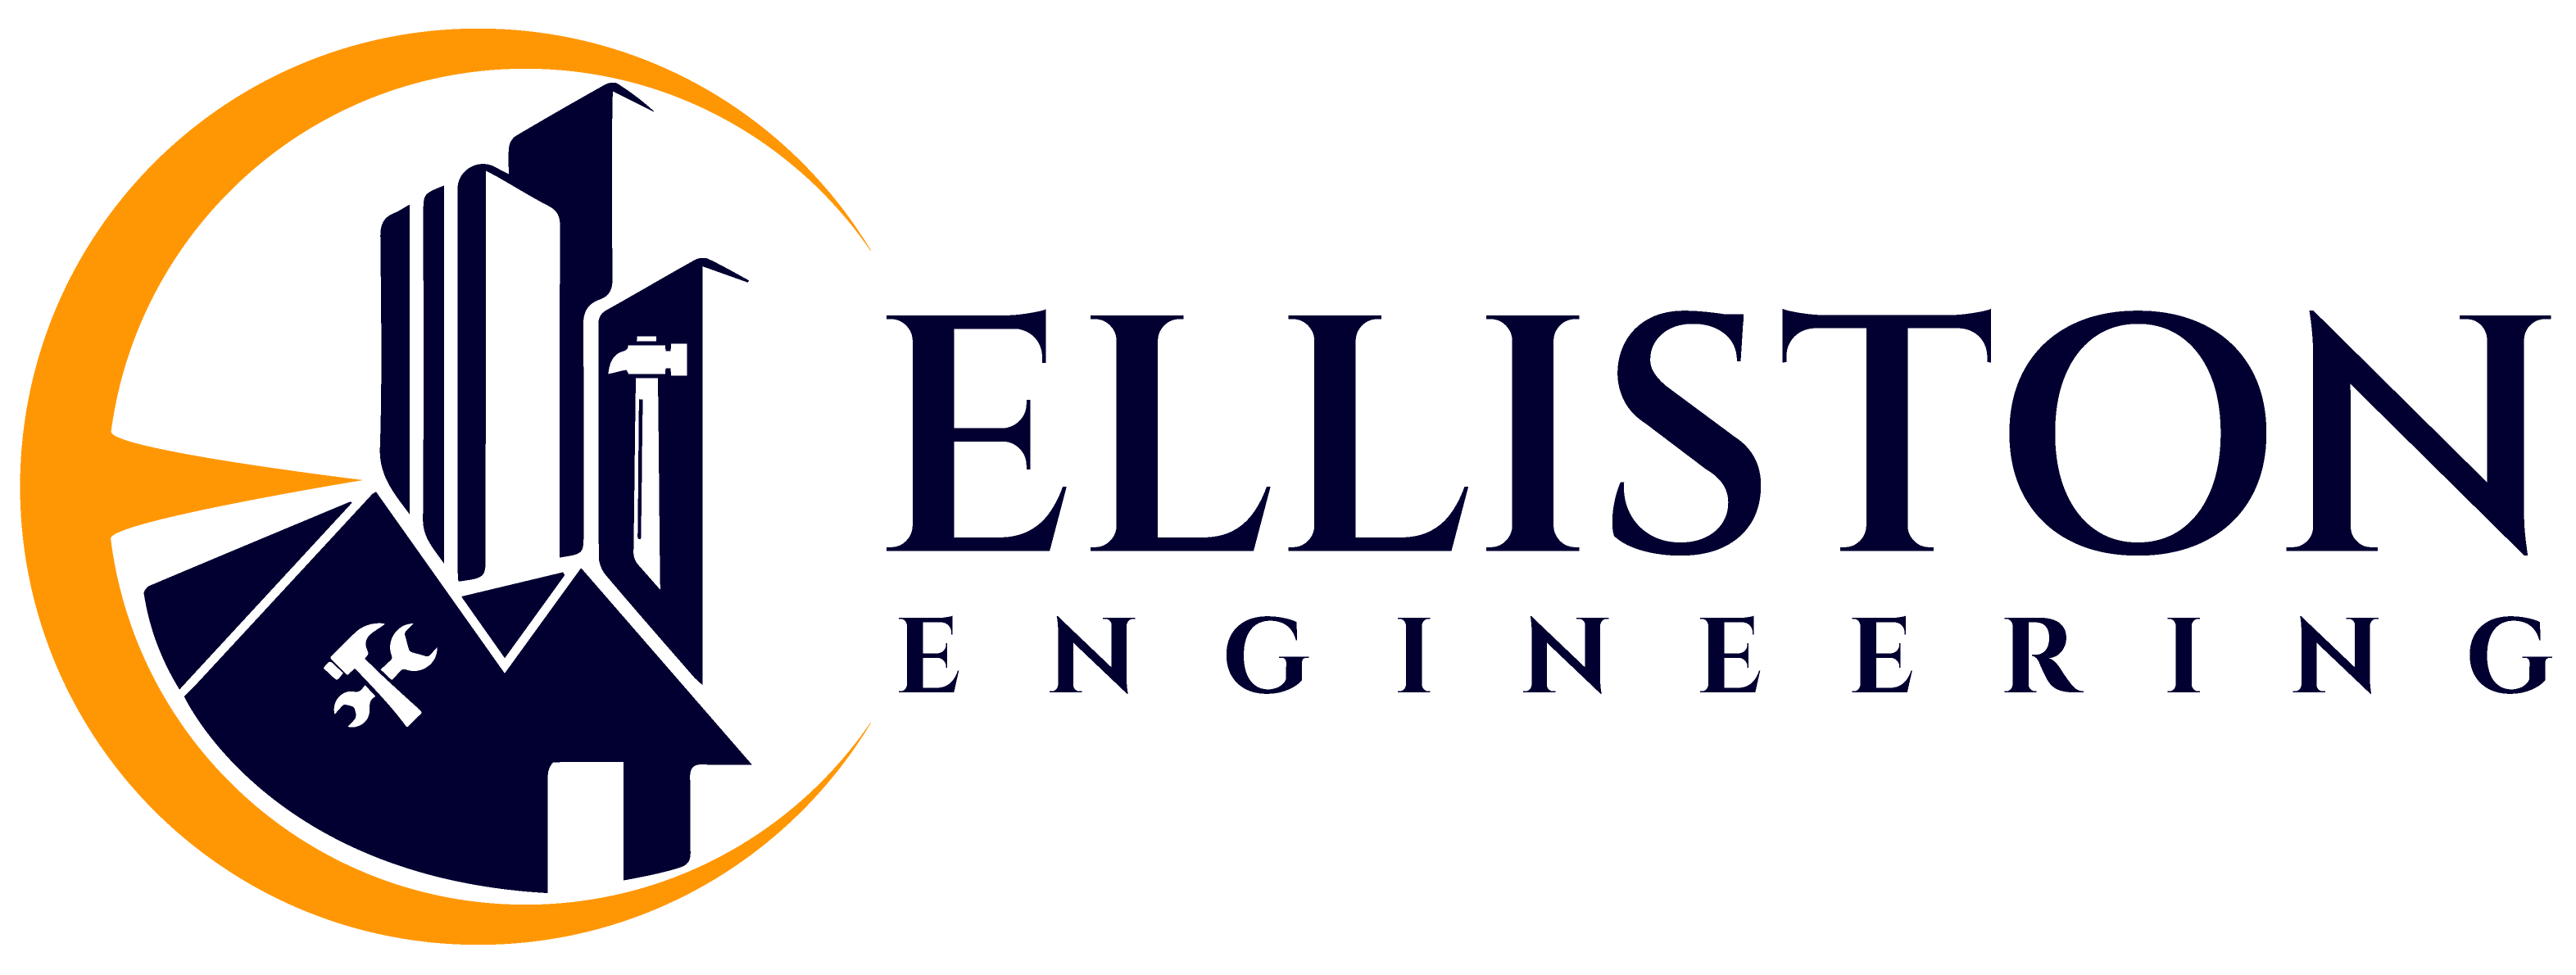 Elliston Engineering